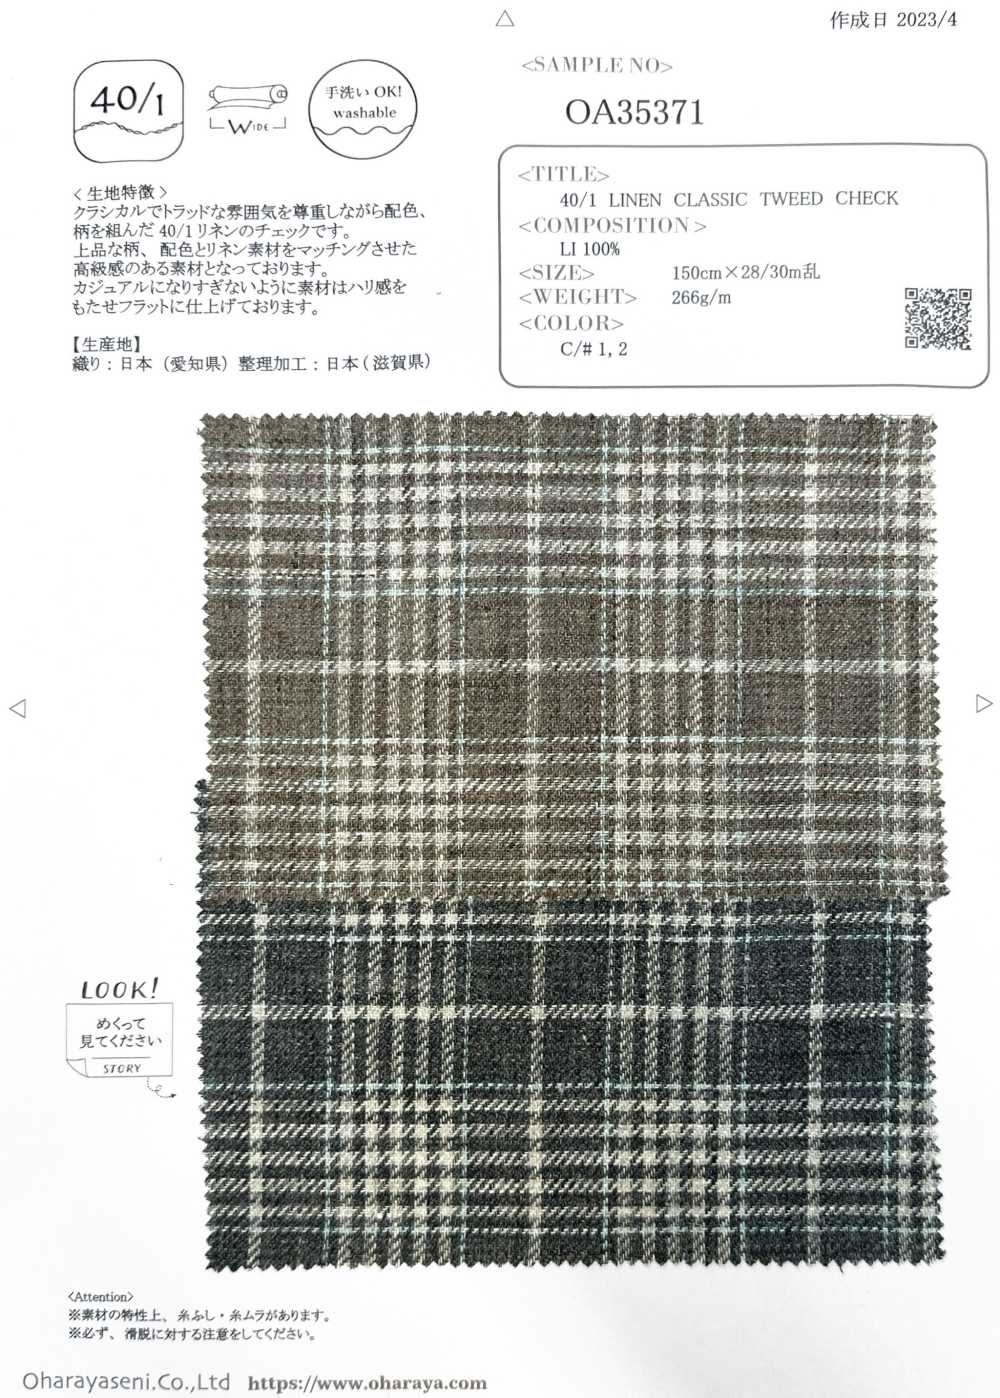 OA35371 CARREAUX TWEED CLASSIQUE LIN 40/1[Fabrication De Textile] Oharayaseni